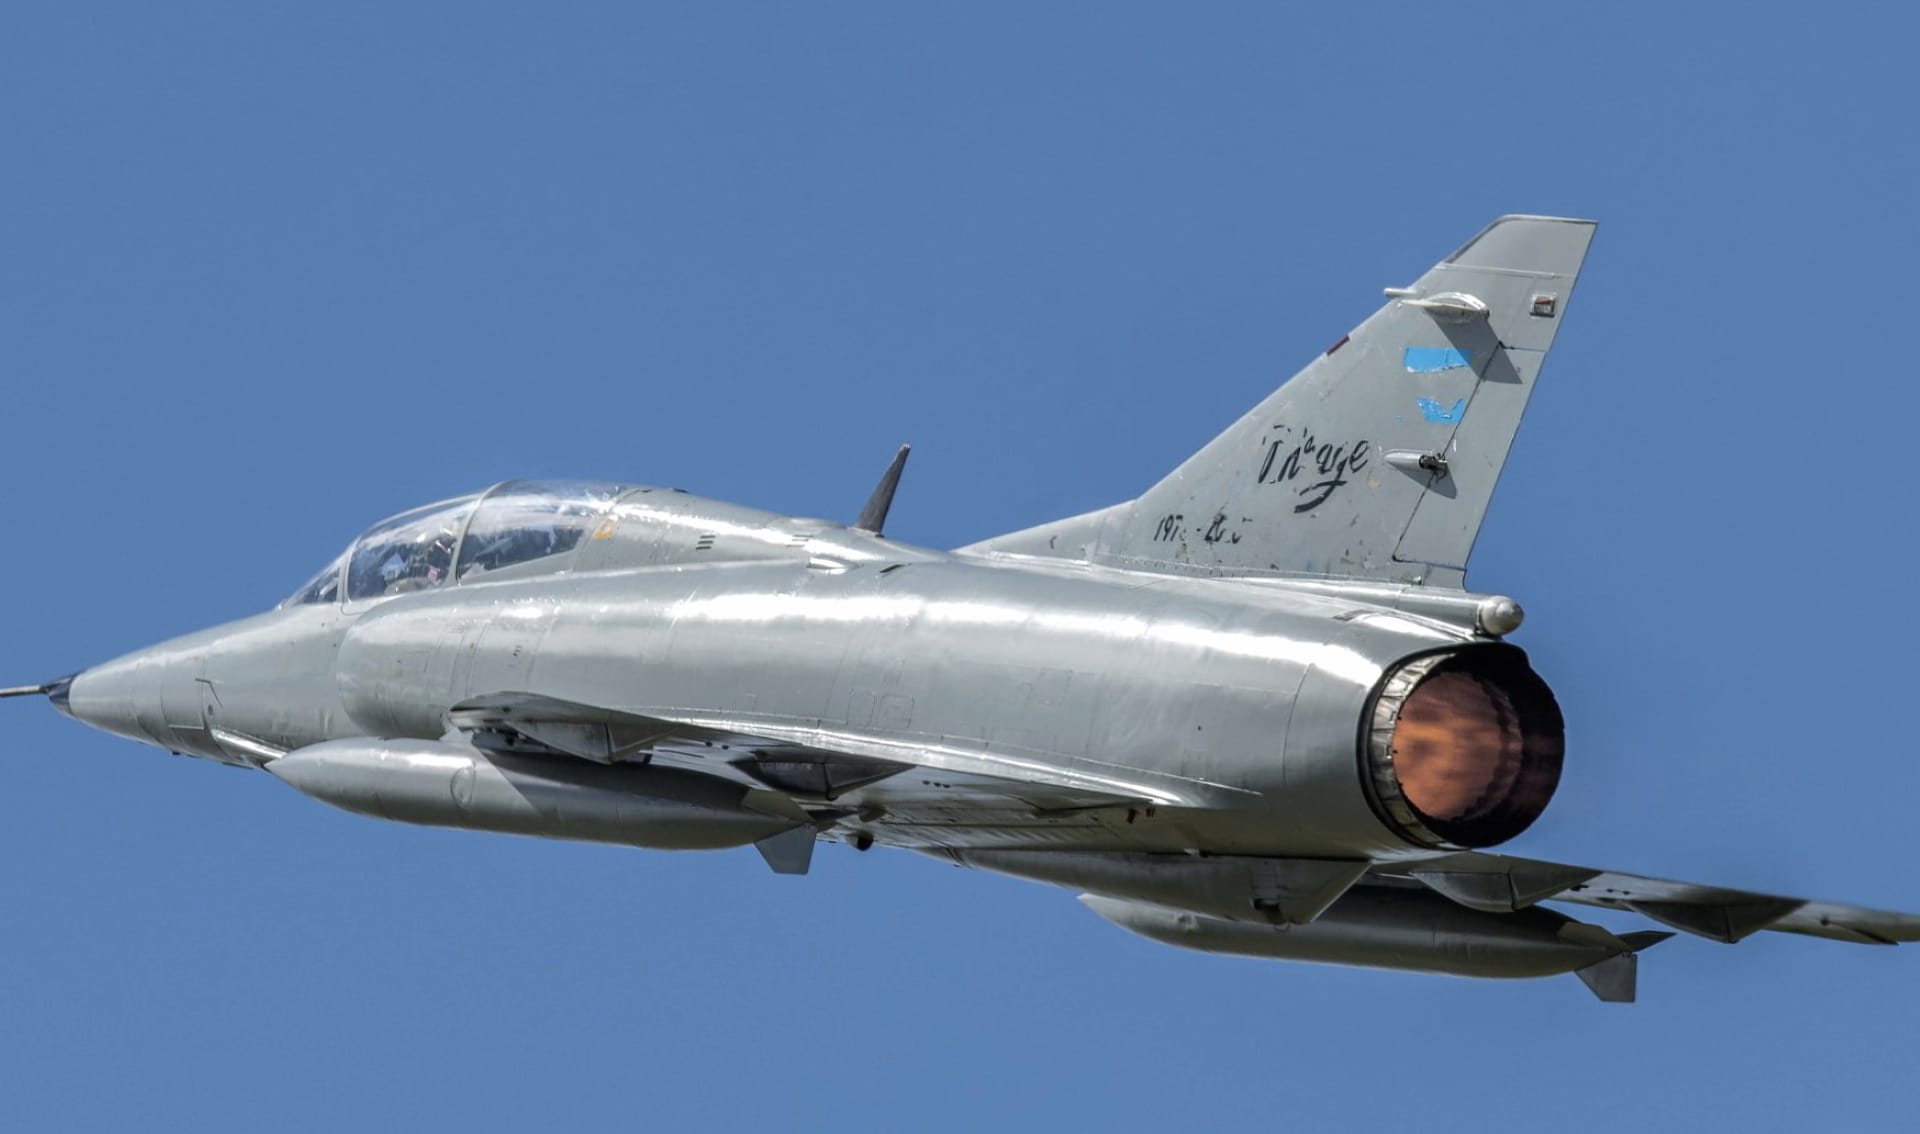 Dassault Mirage III wallpapers HD quality